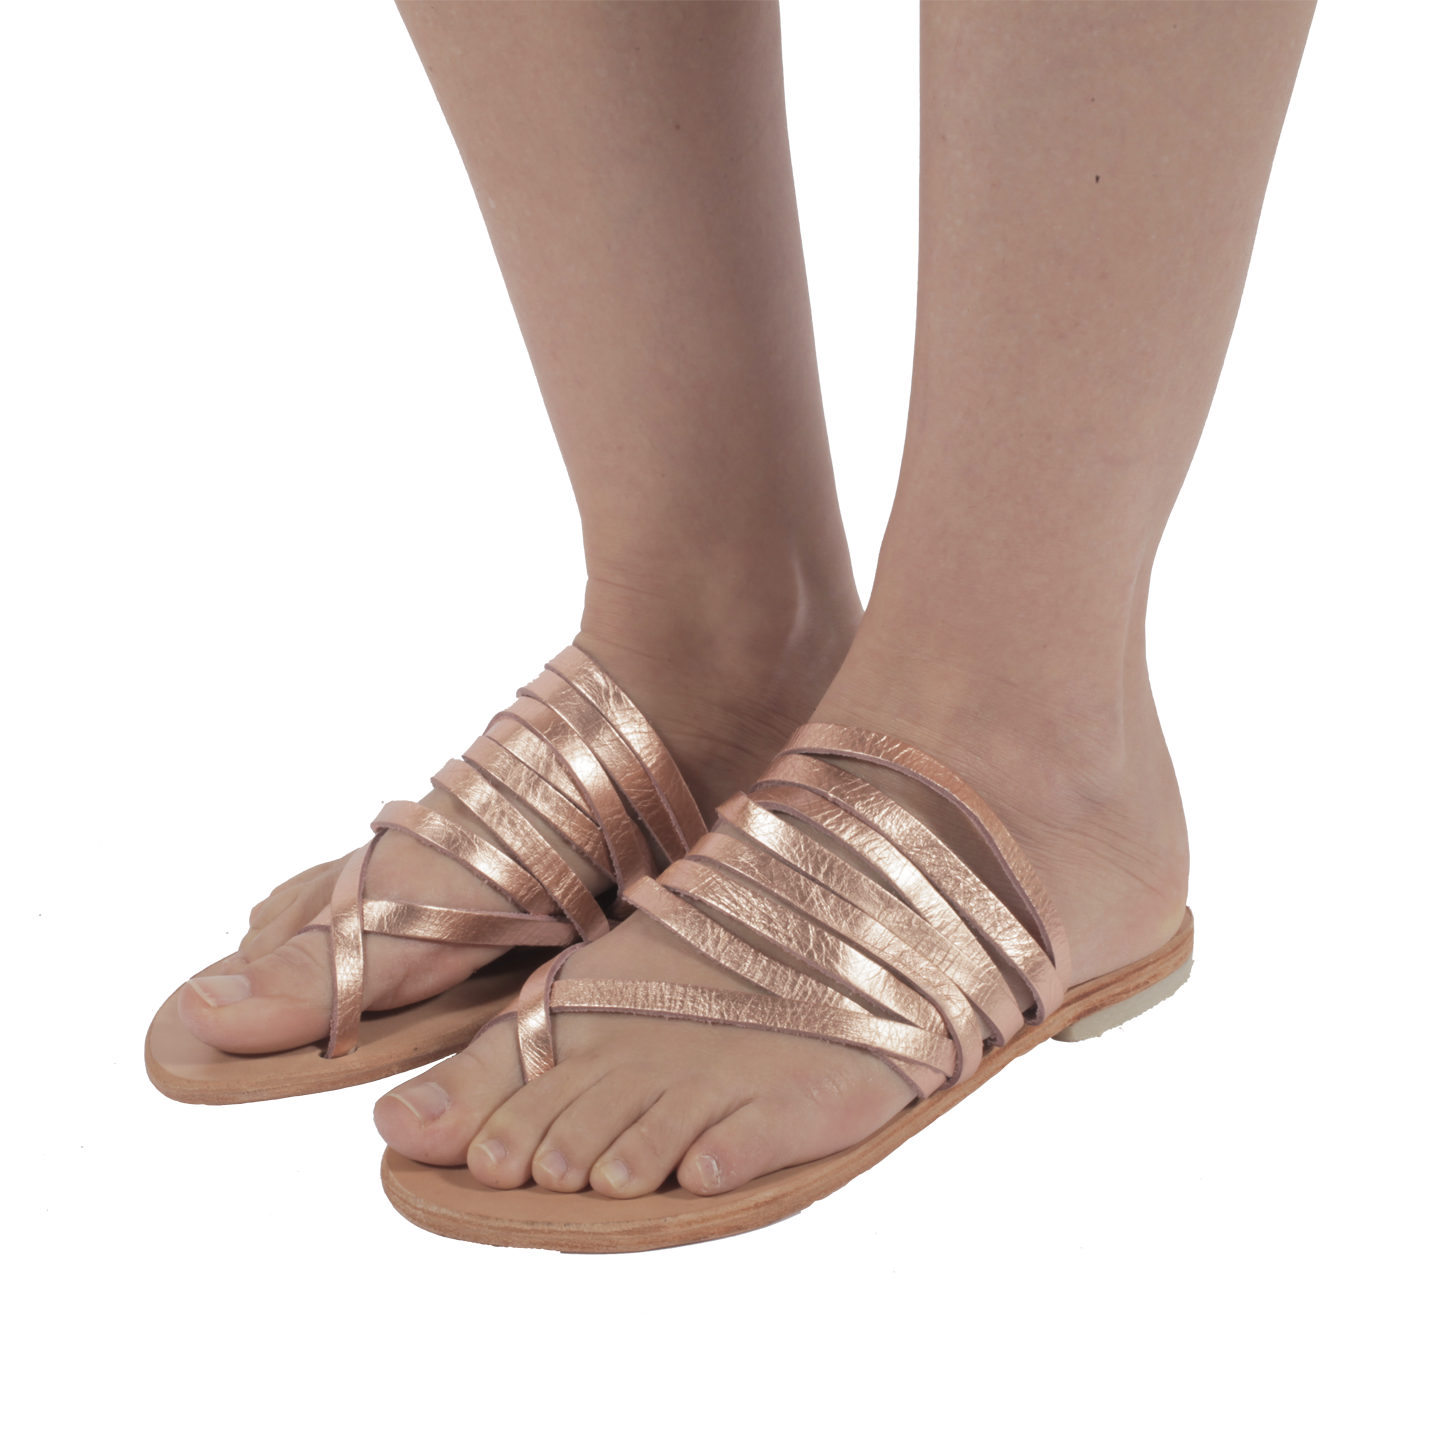 Careyes Sandals